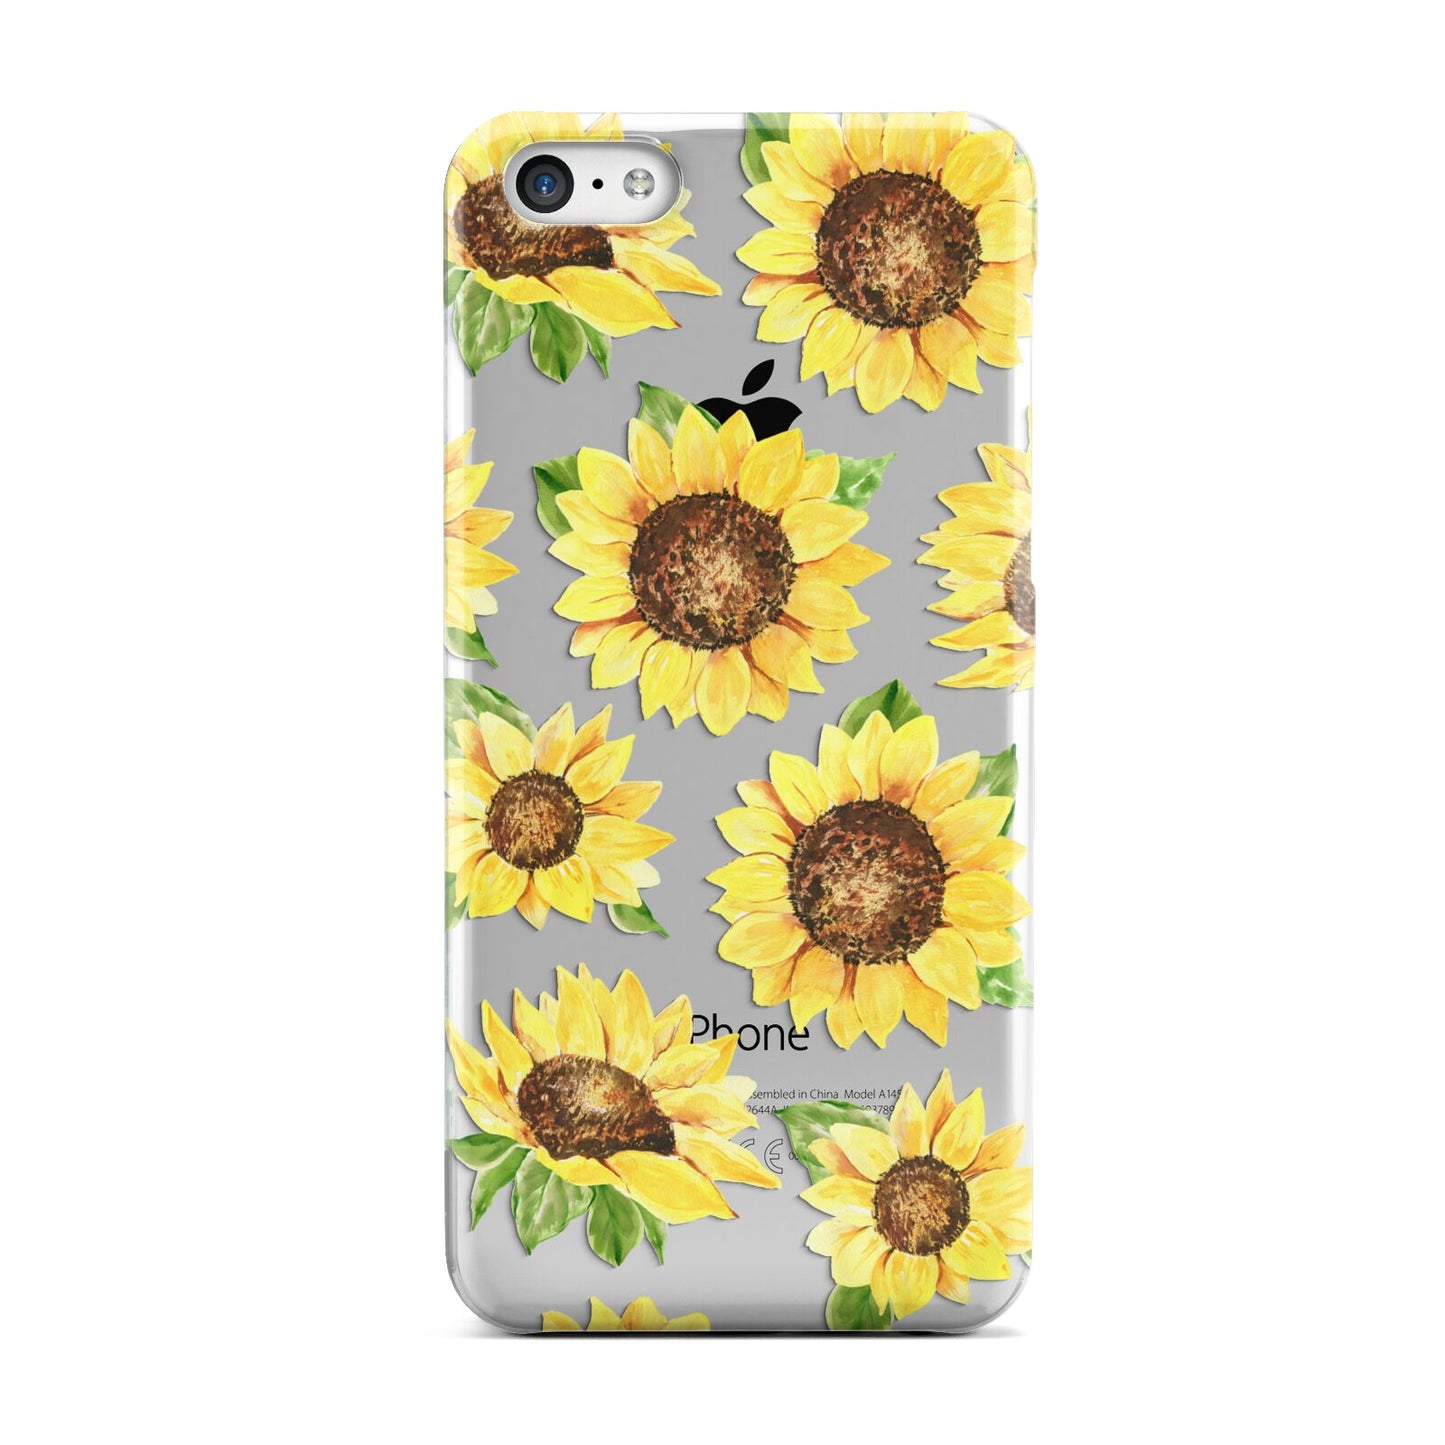 Sunflowers Apple iPhone 5c Case